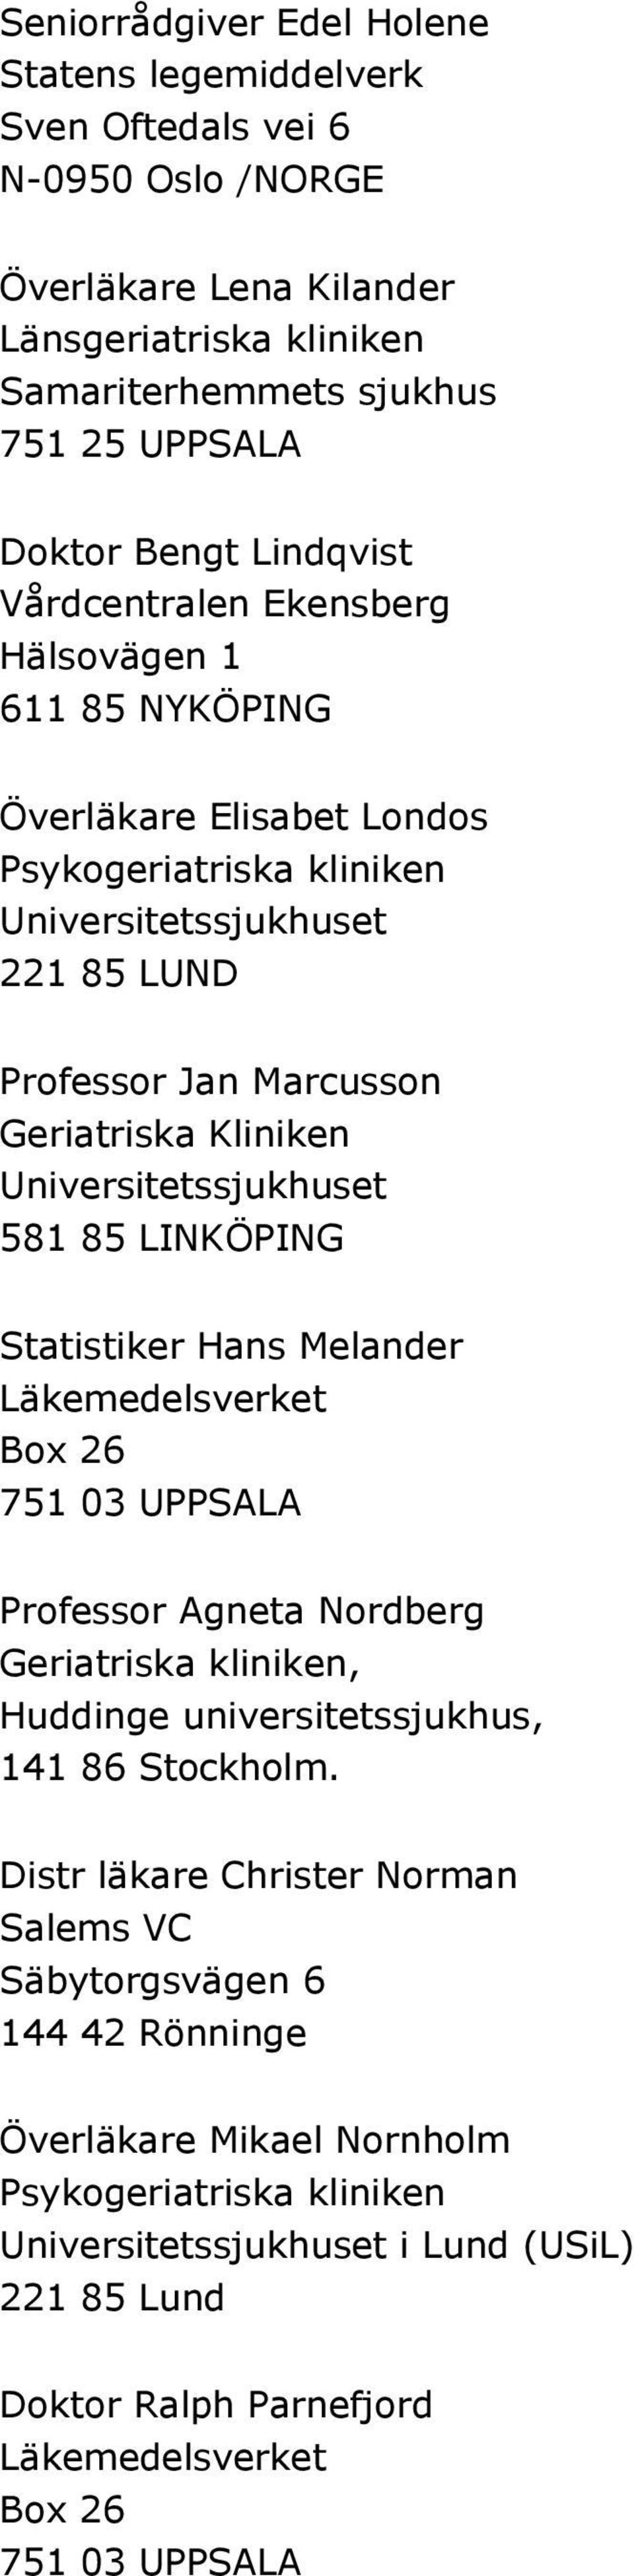 Universitetssjukhuset 581 85 LINKÖPING Statistiker Hans Melander Läkemedelsverket Box 26 751 03 UPPSALA Professor Agneta Nordberg Geriatriska kliniken, Huddinge universitetssjukhus, 141 86 Stockholm.